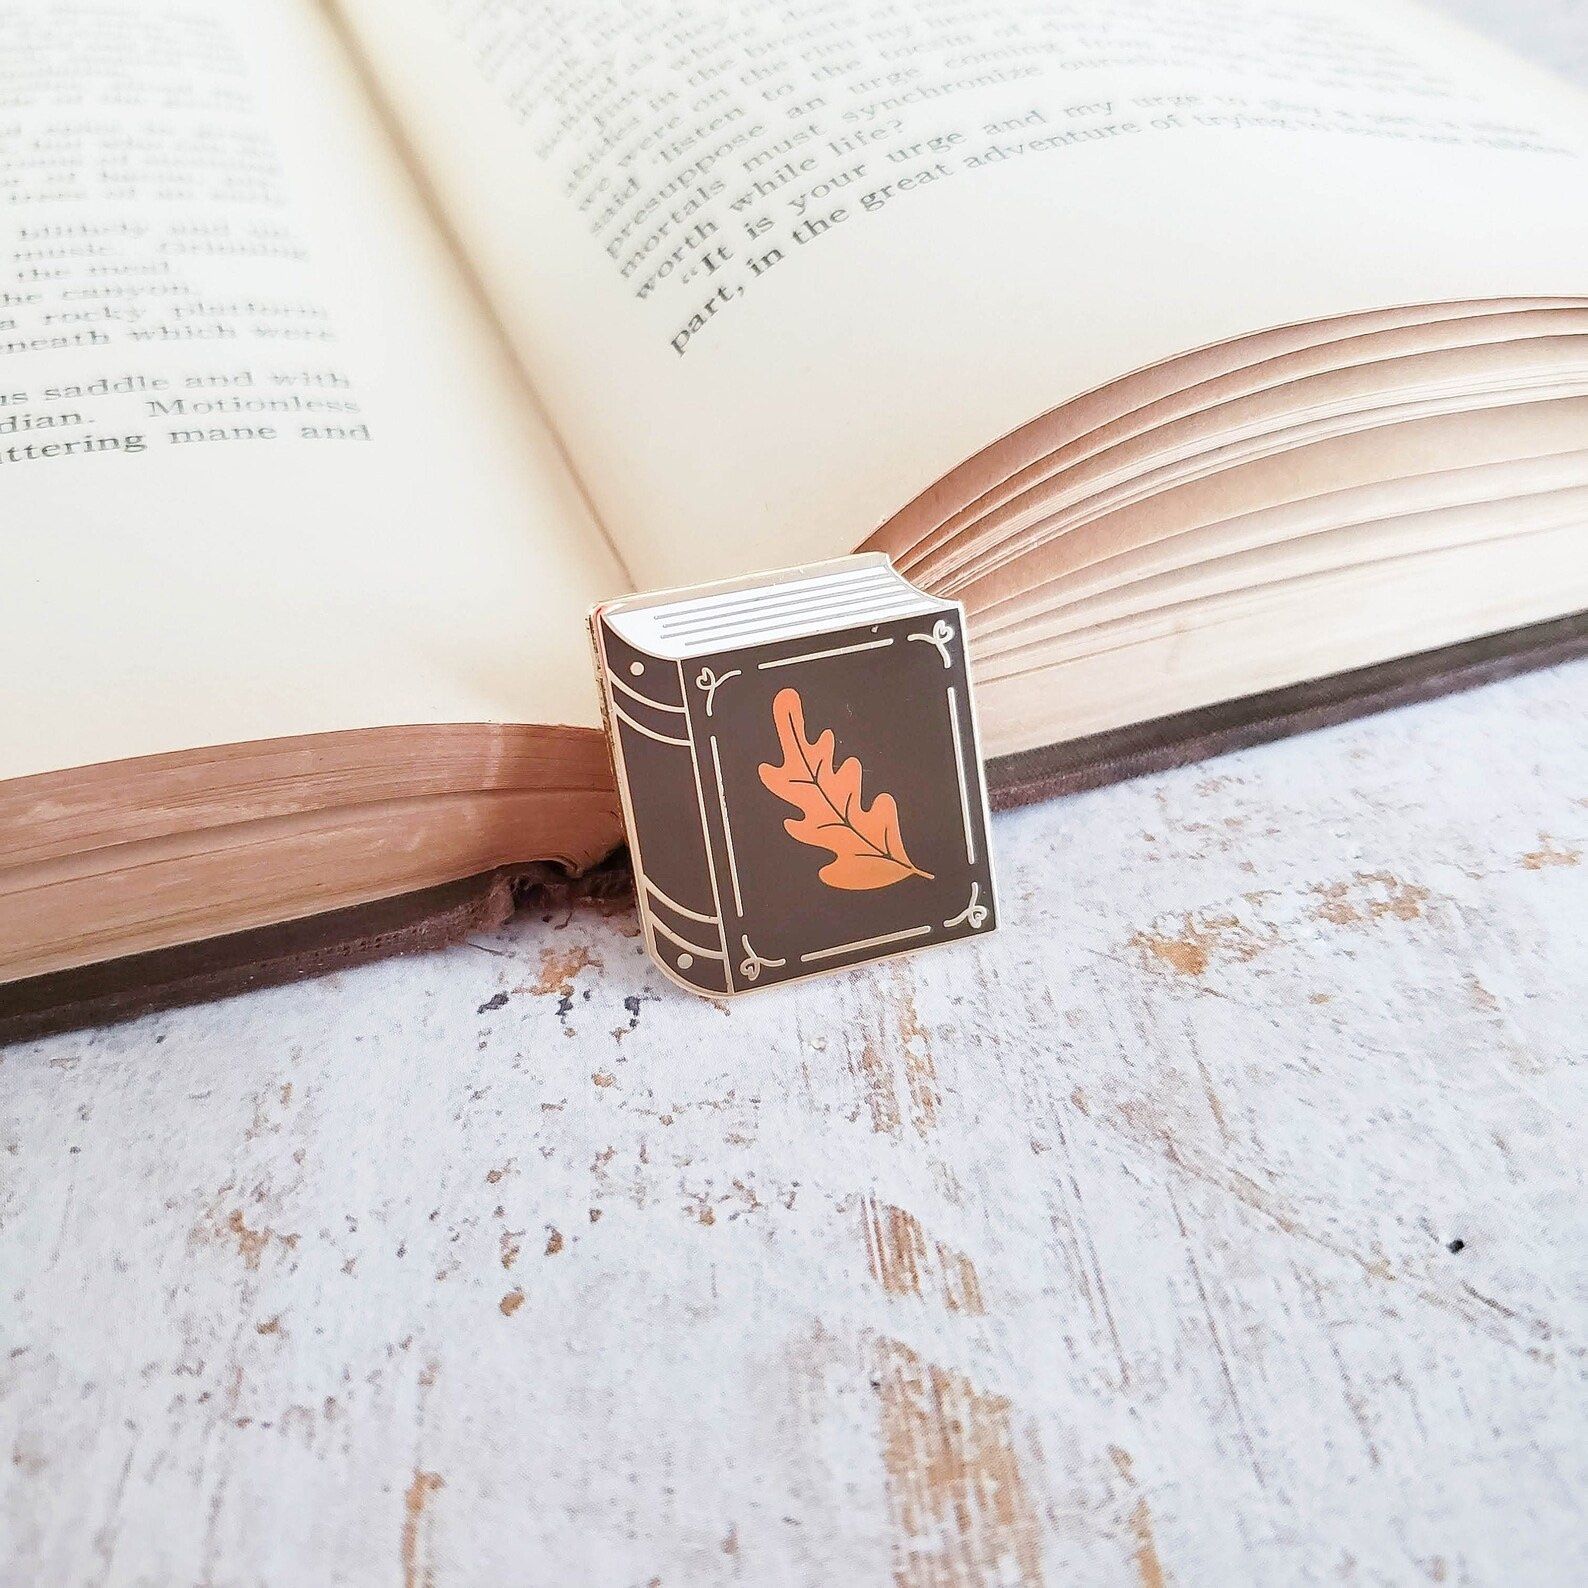 enamel pin of a book with an oak leaf on it